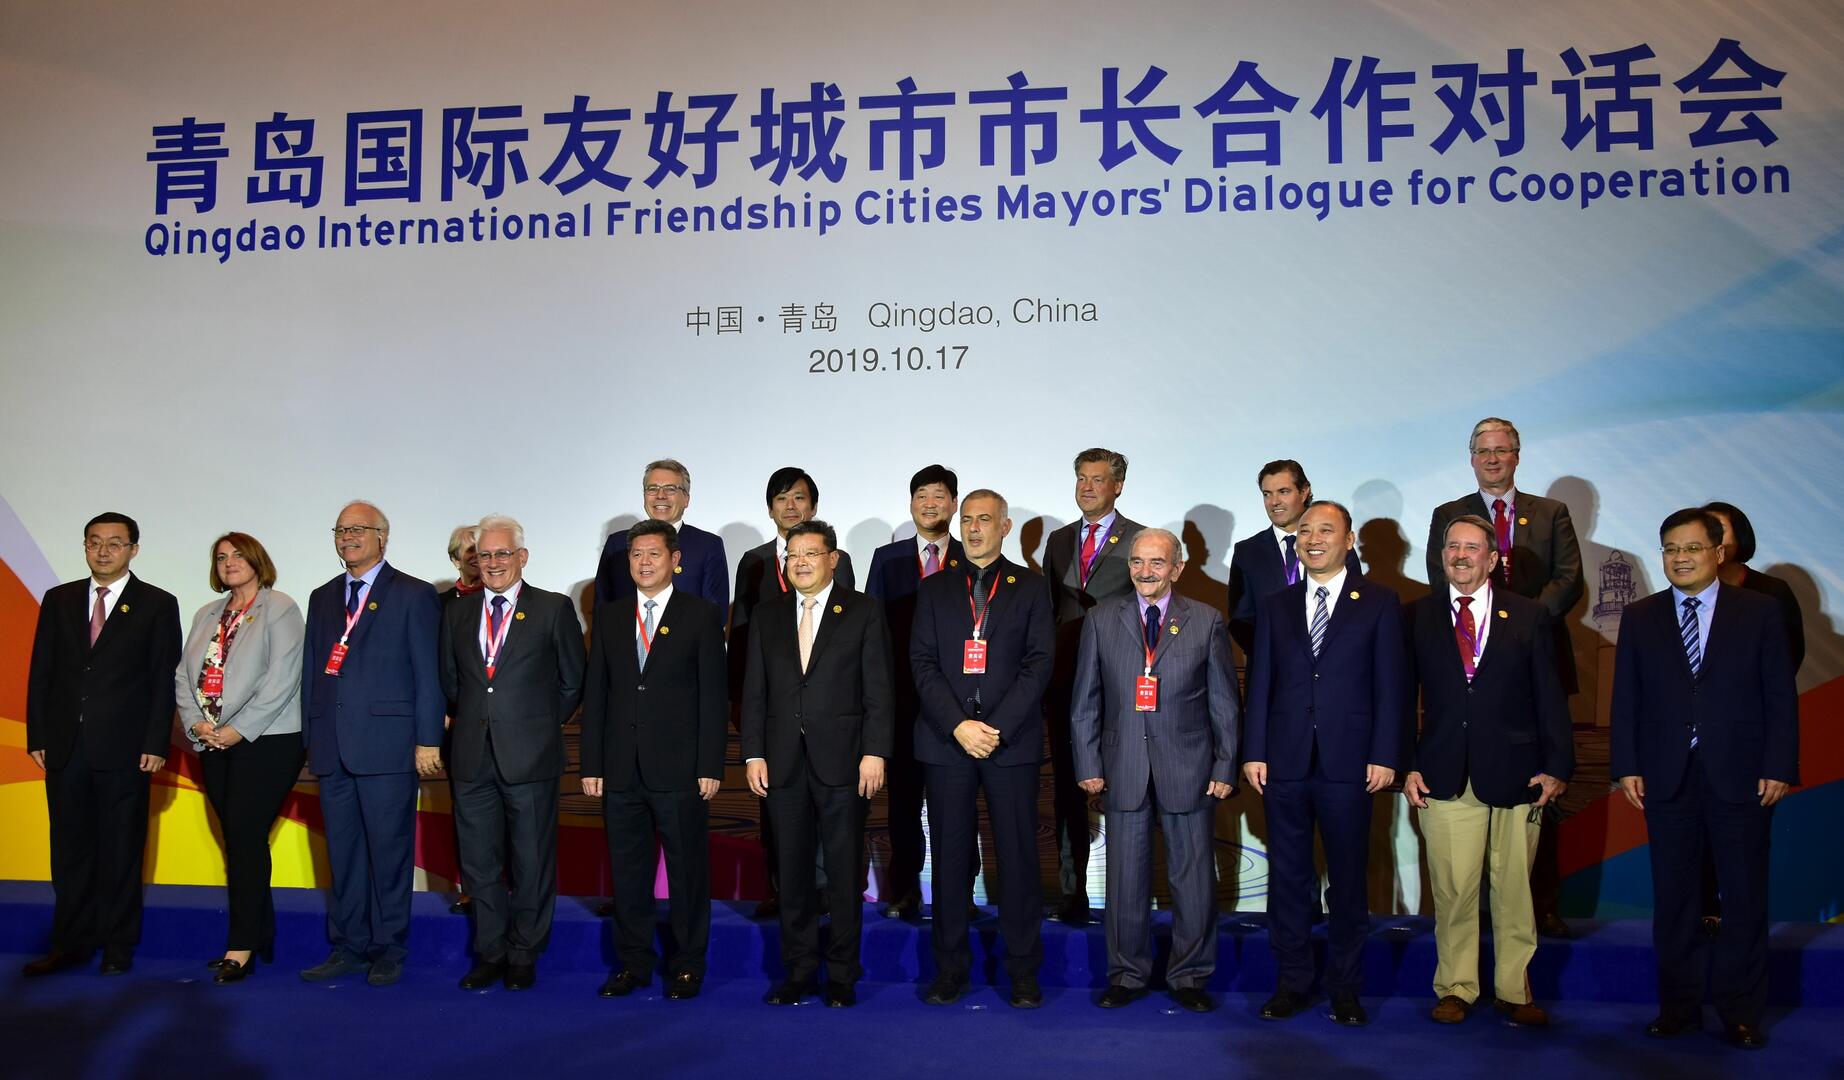 Städtepartnerschaft mit Qingdao gefeiert